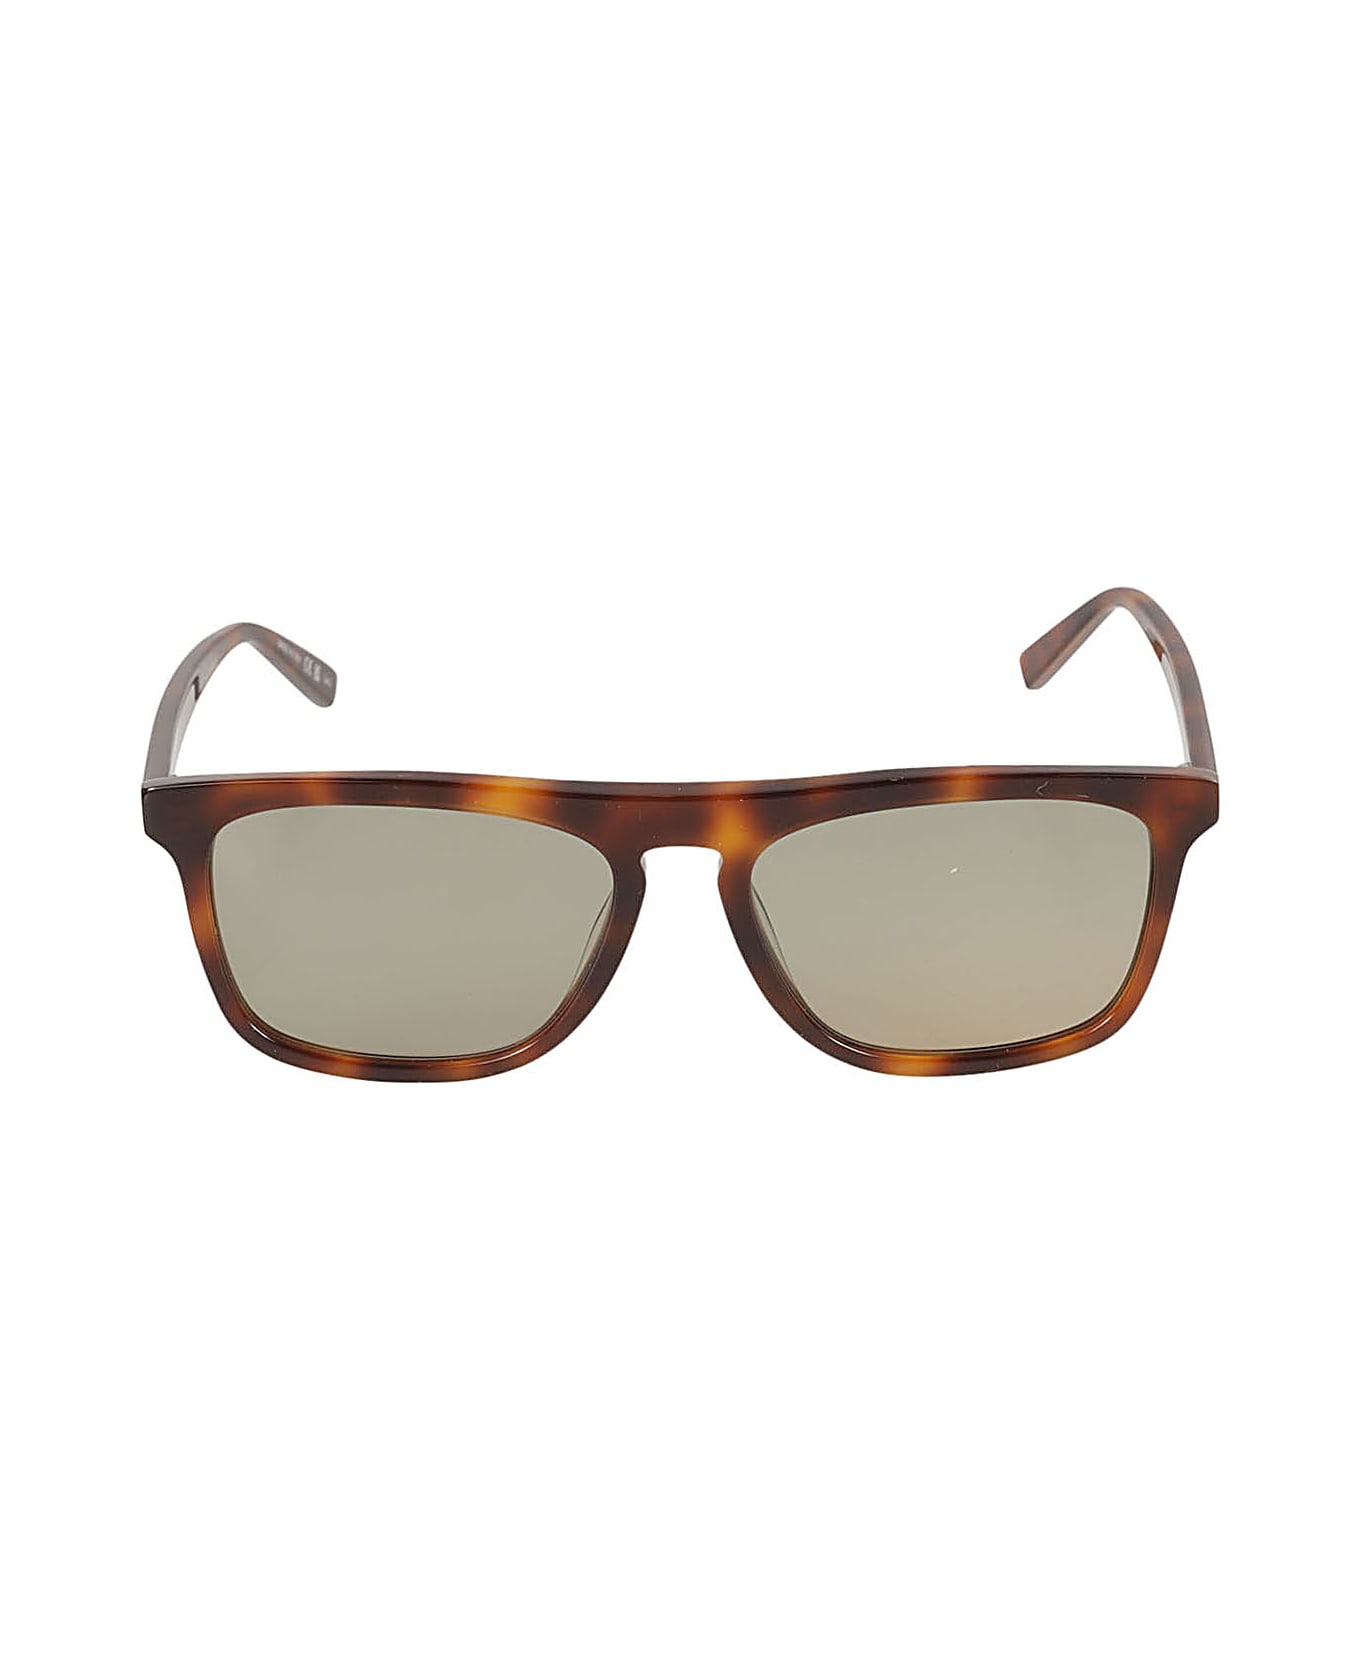 Saint Laurent Eyewear Square Frame Flame Effect Sunglasses - Havana/Green